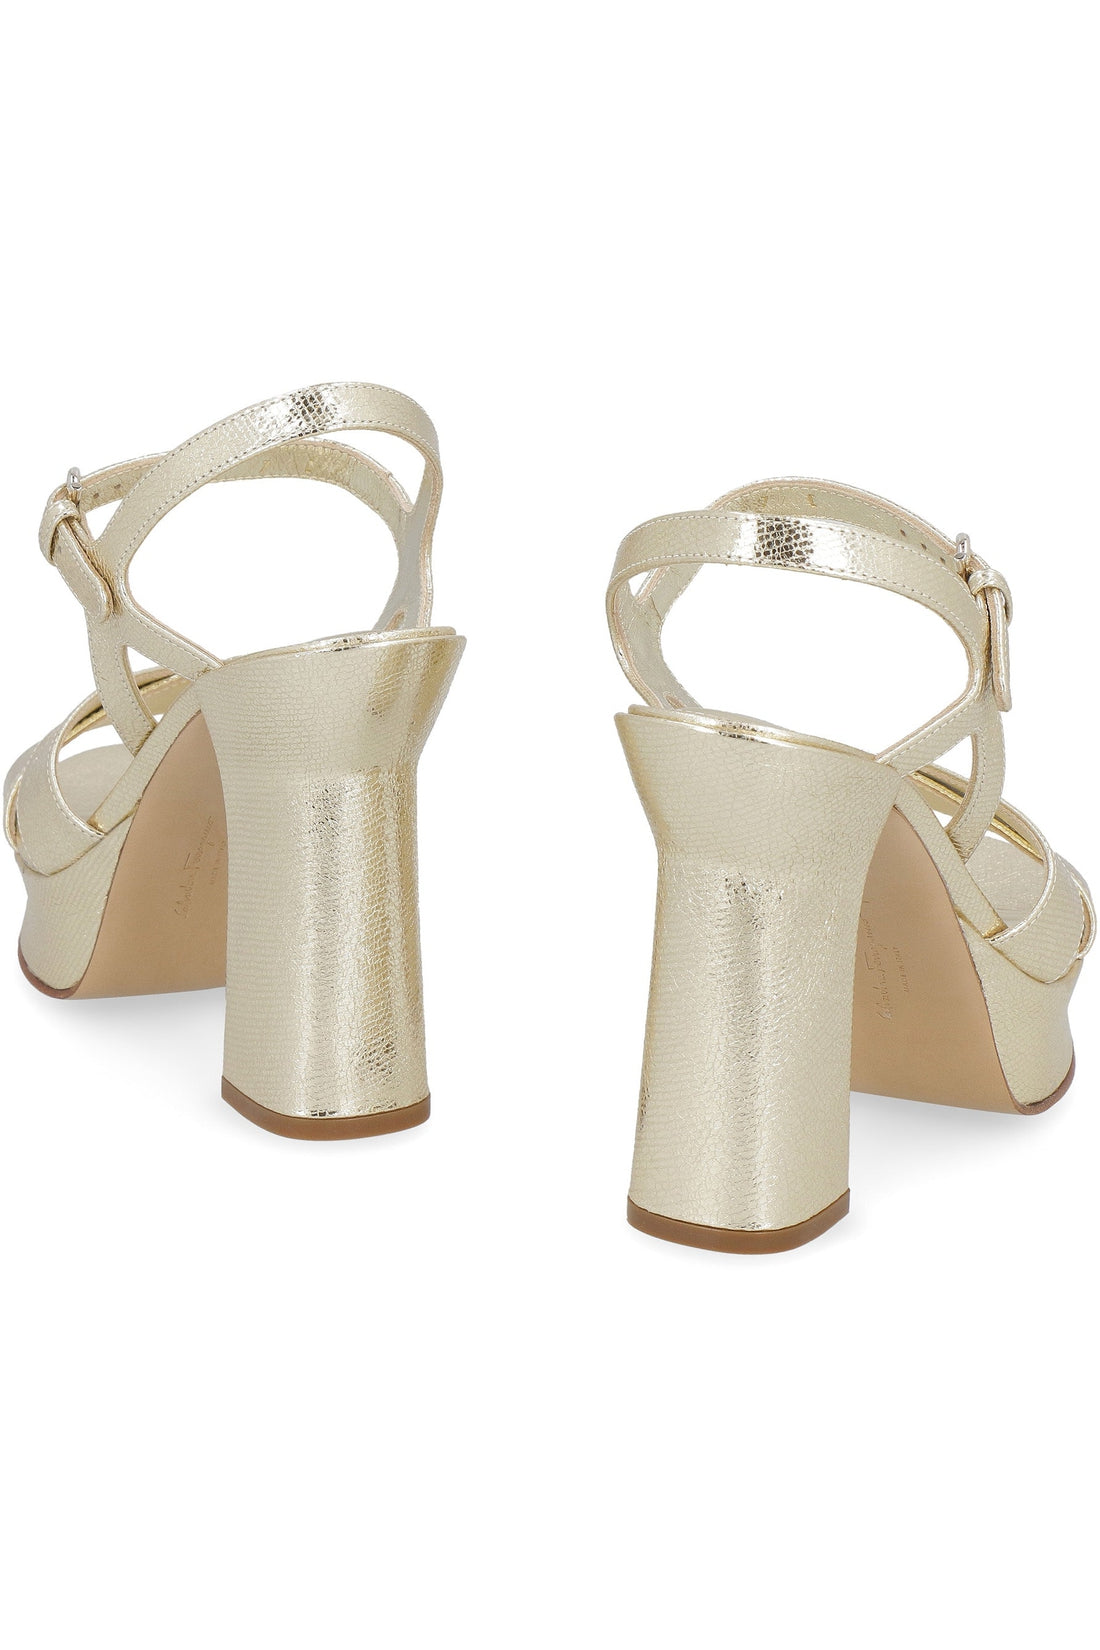 FERRAGAMO-OUTLET-SALE-Sonya Leather platform sandals-ARCHIVIST